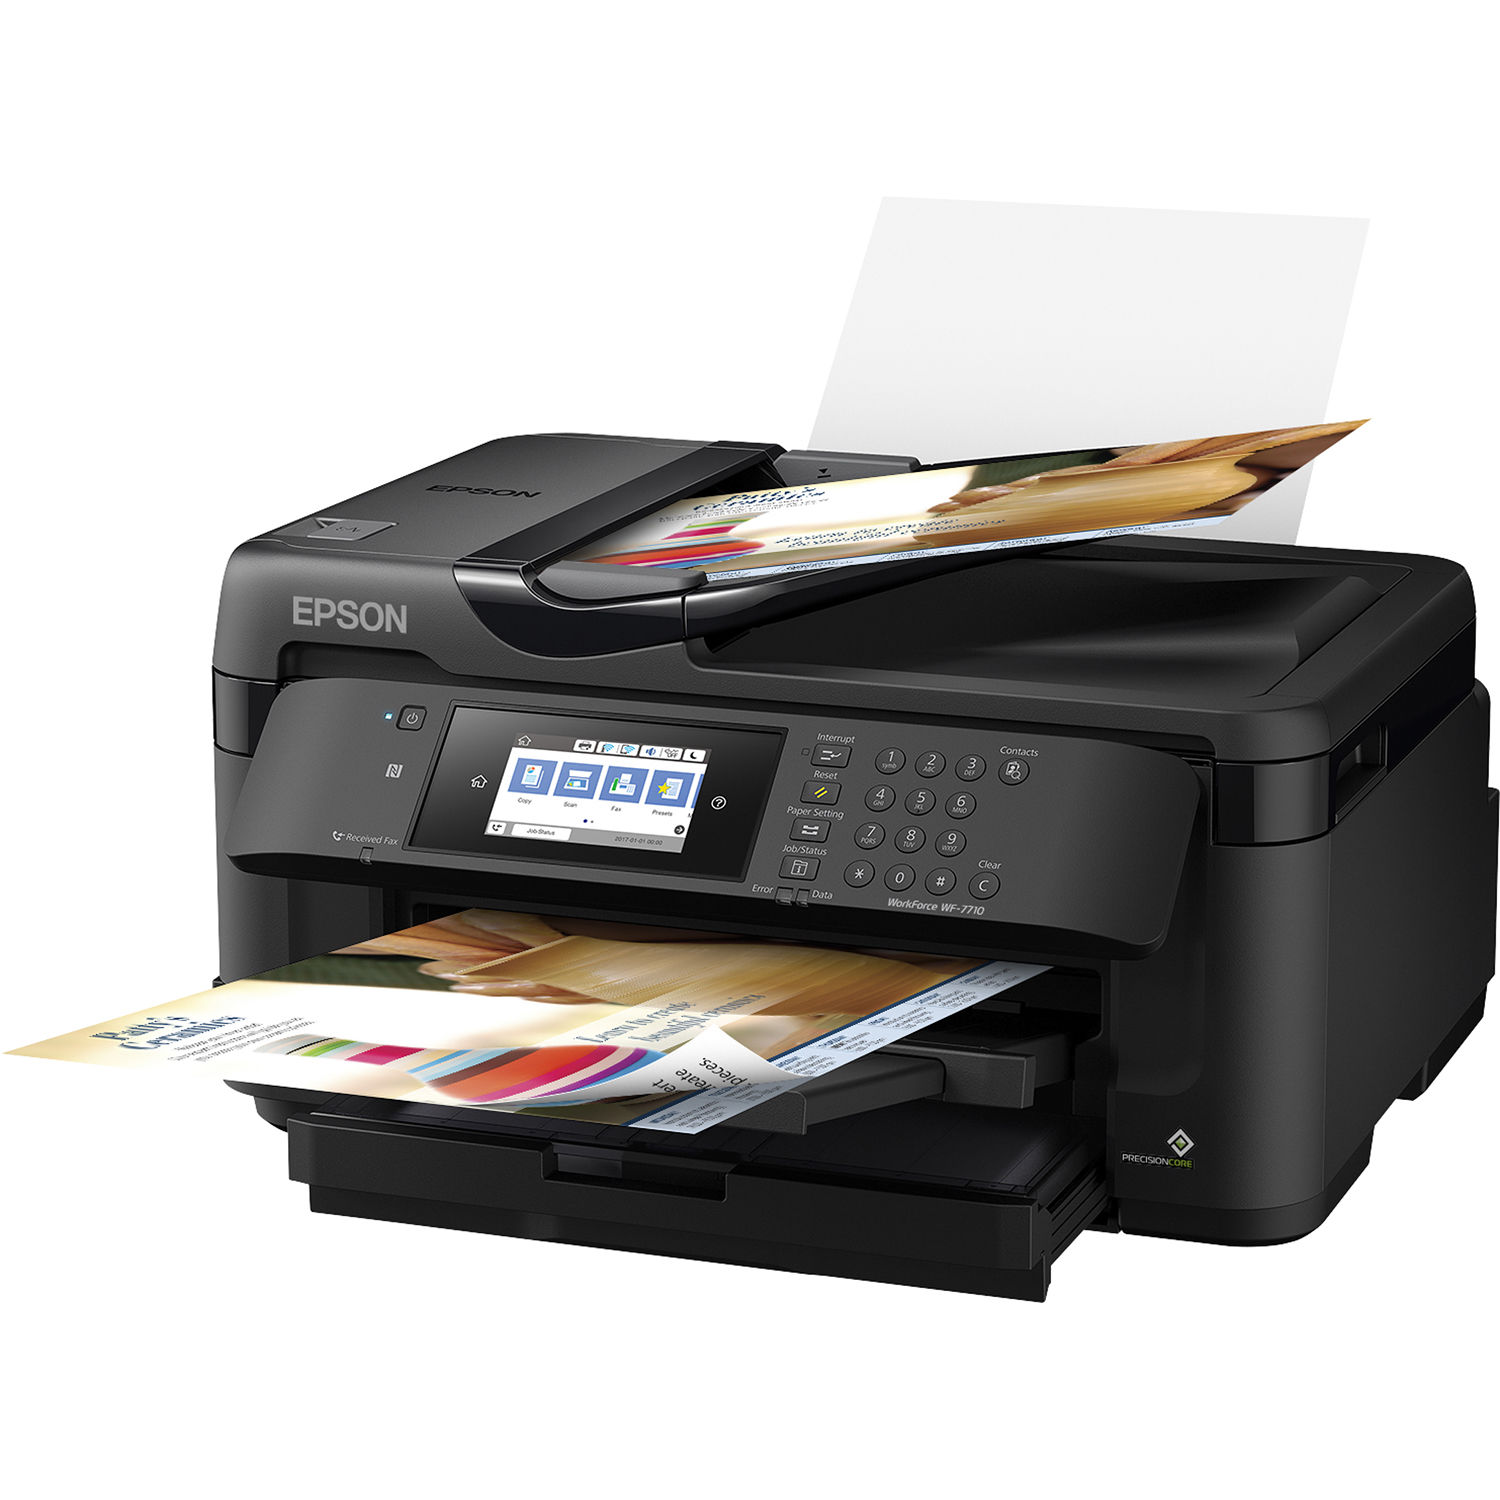 Epson WorkForce WF-7710 Wide-format All-in-One Printer